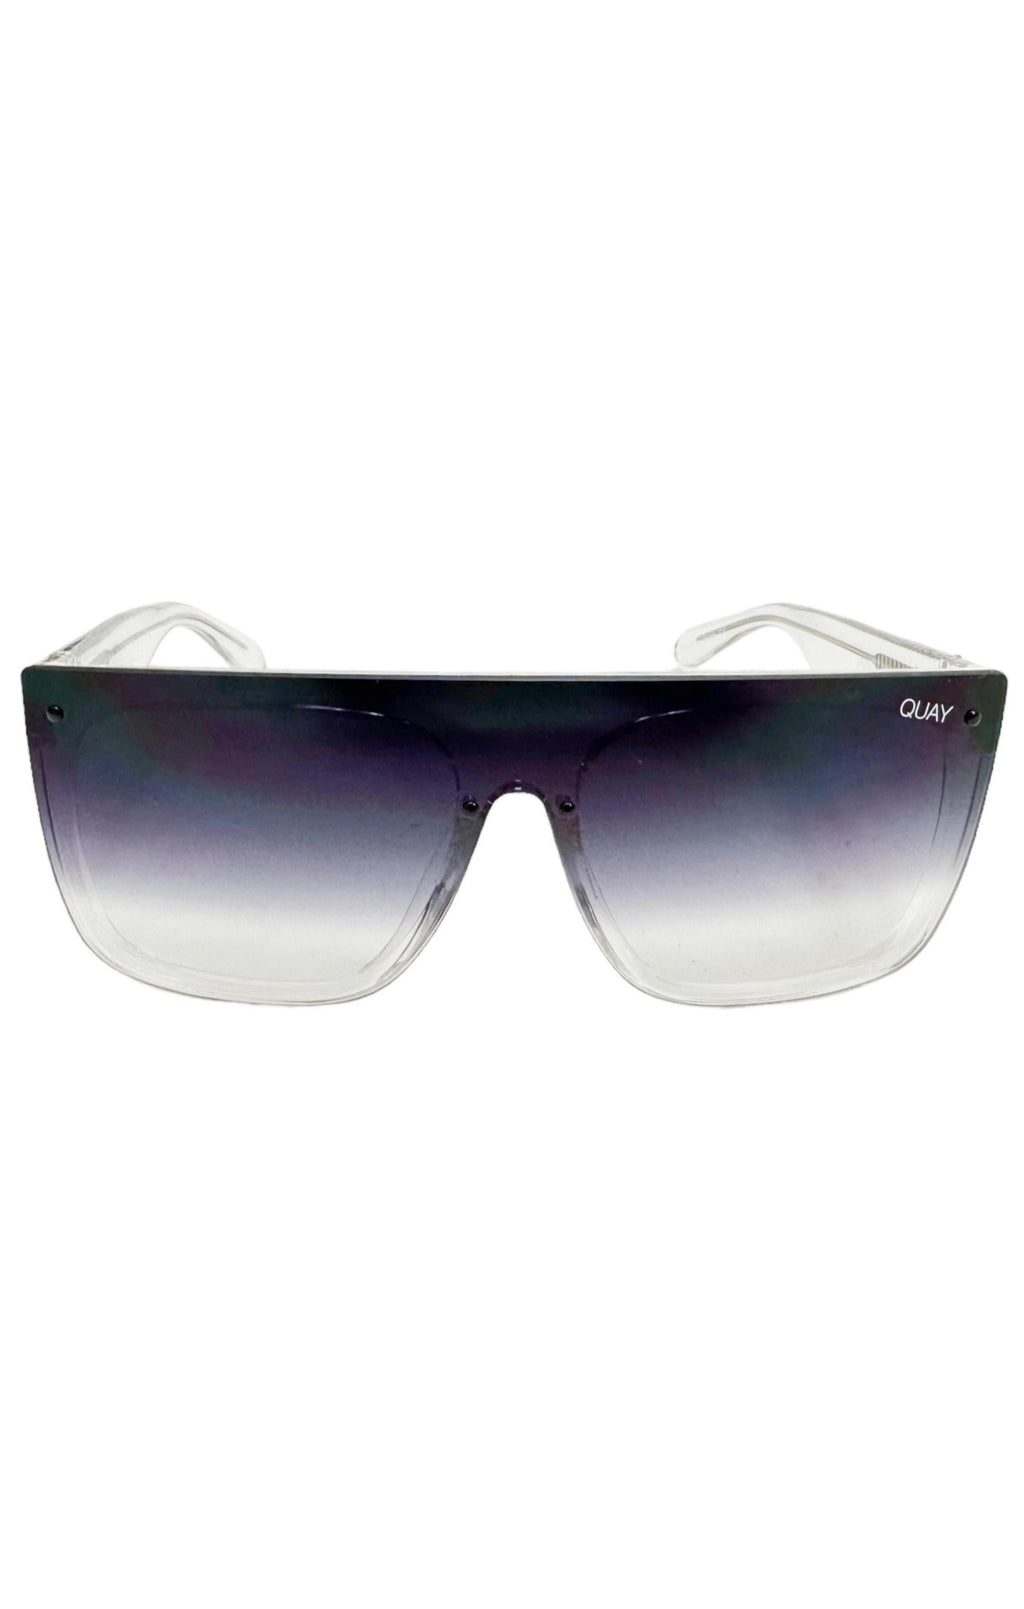 QUAY (NEW) Sunglasses Size: 6" x 2.25"